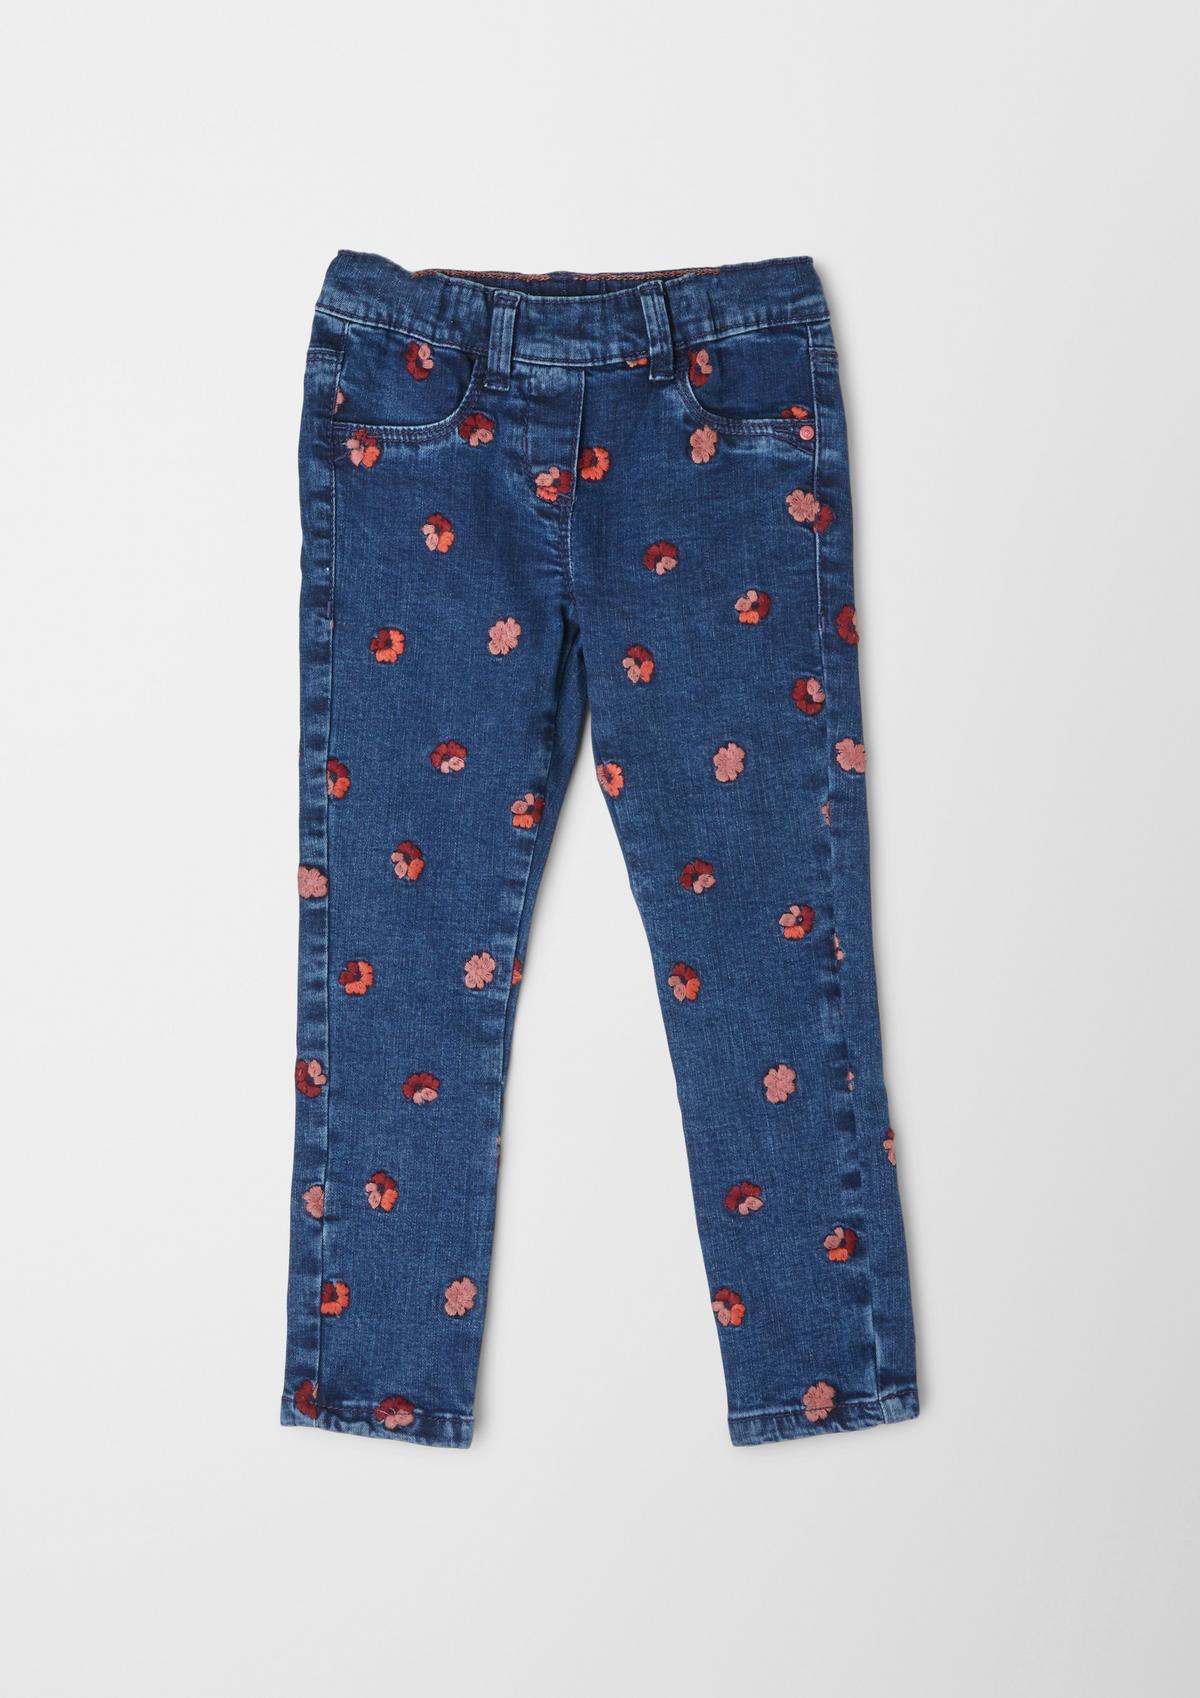 s.Oliver Slim: florally patterned jeans